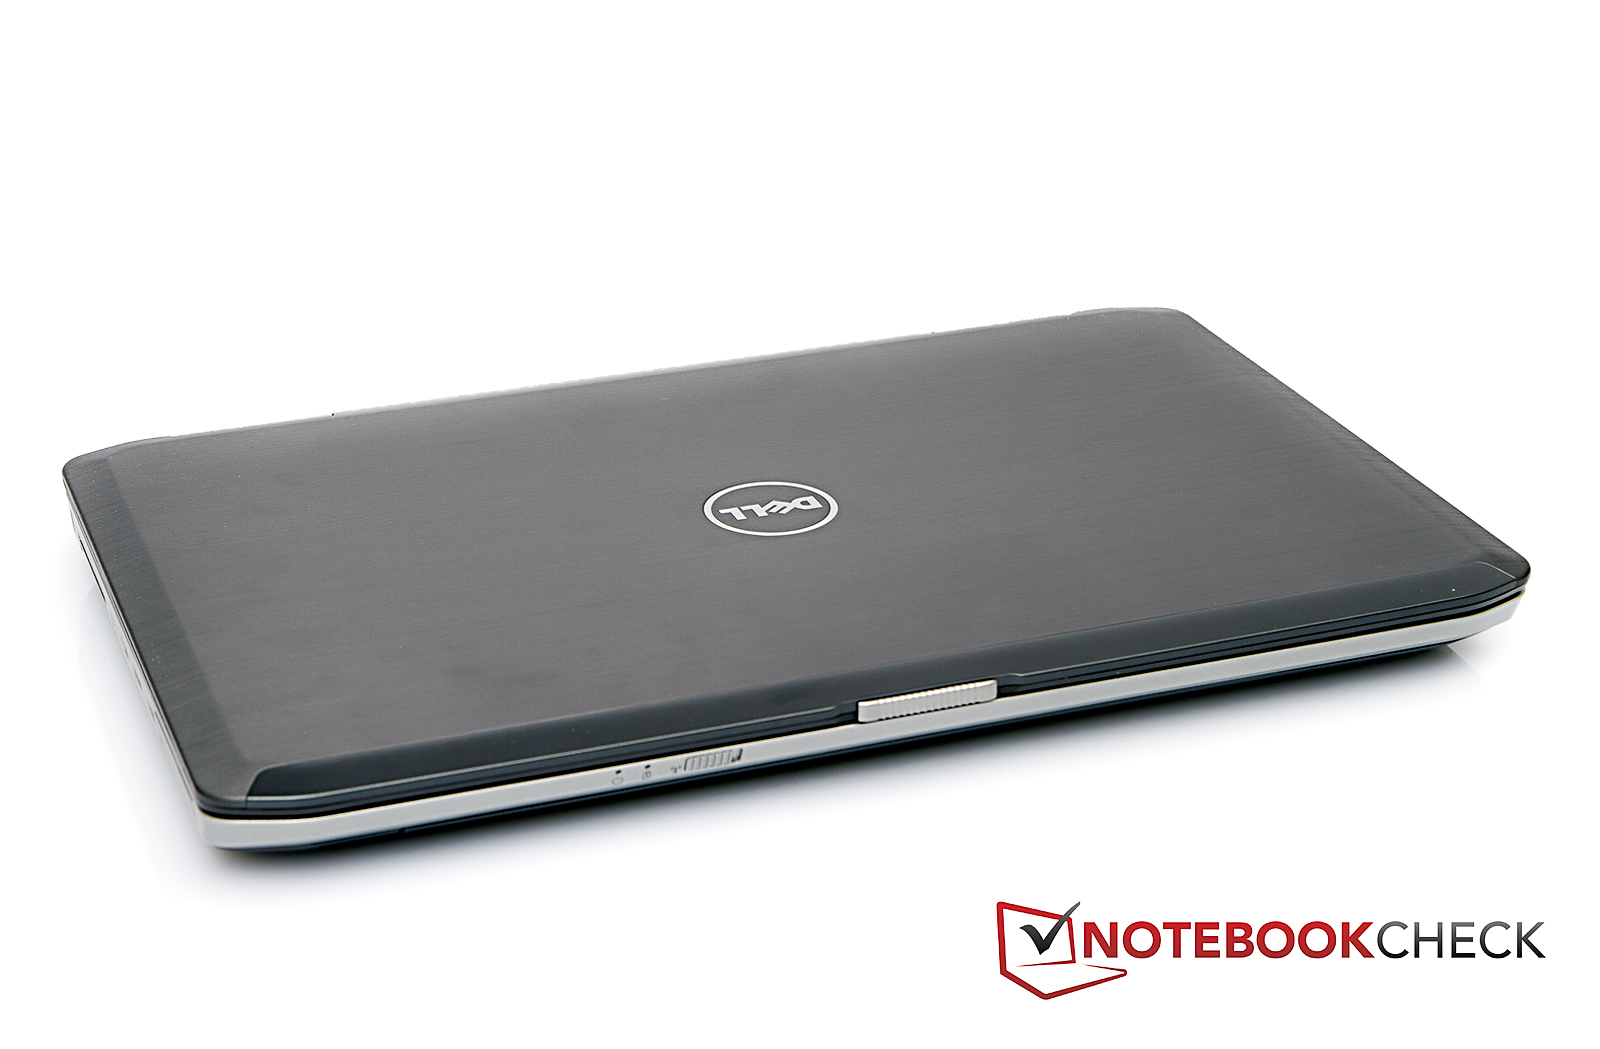 Review Dell Latitude E5520 Notebook - NotebookCheck.net Reviews